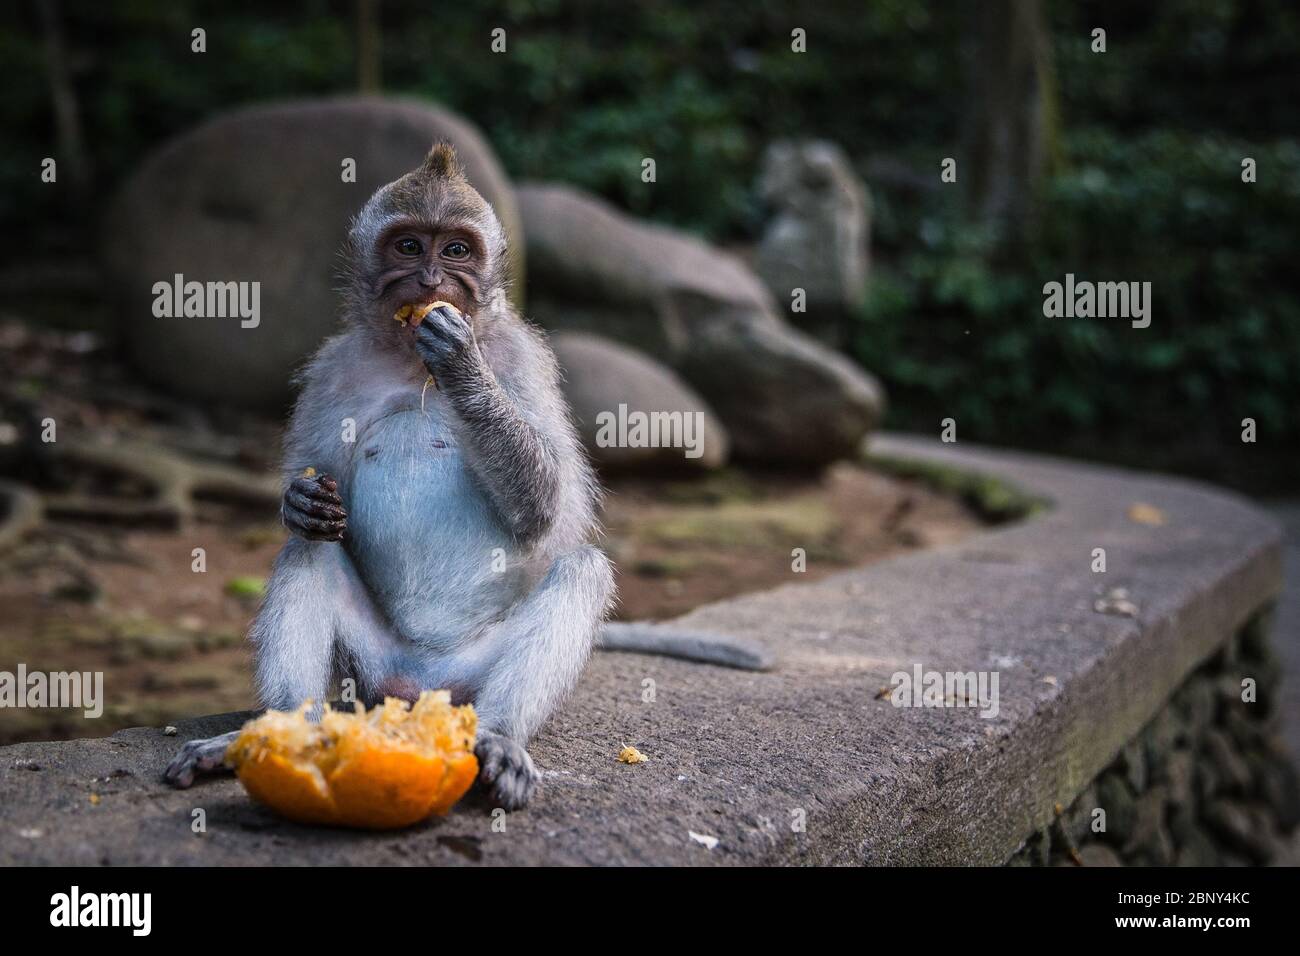 A long tailed grey monkey sitting on the wall and eating a fresh orange, UBUD MONKEY FOREST, BALI, INDONESIA Stock Photo